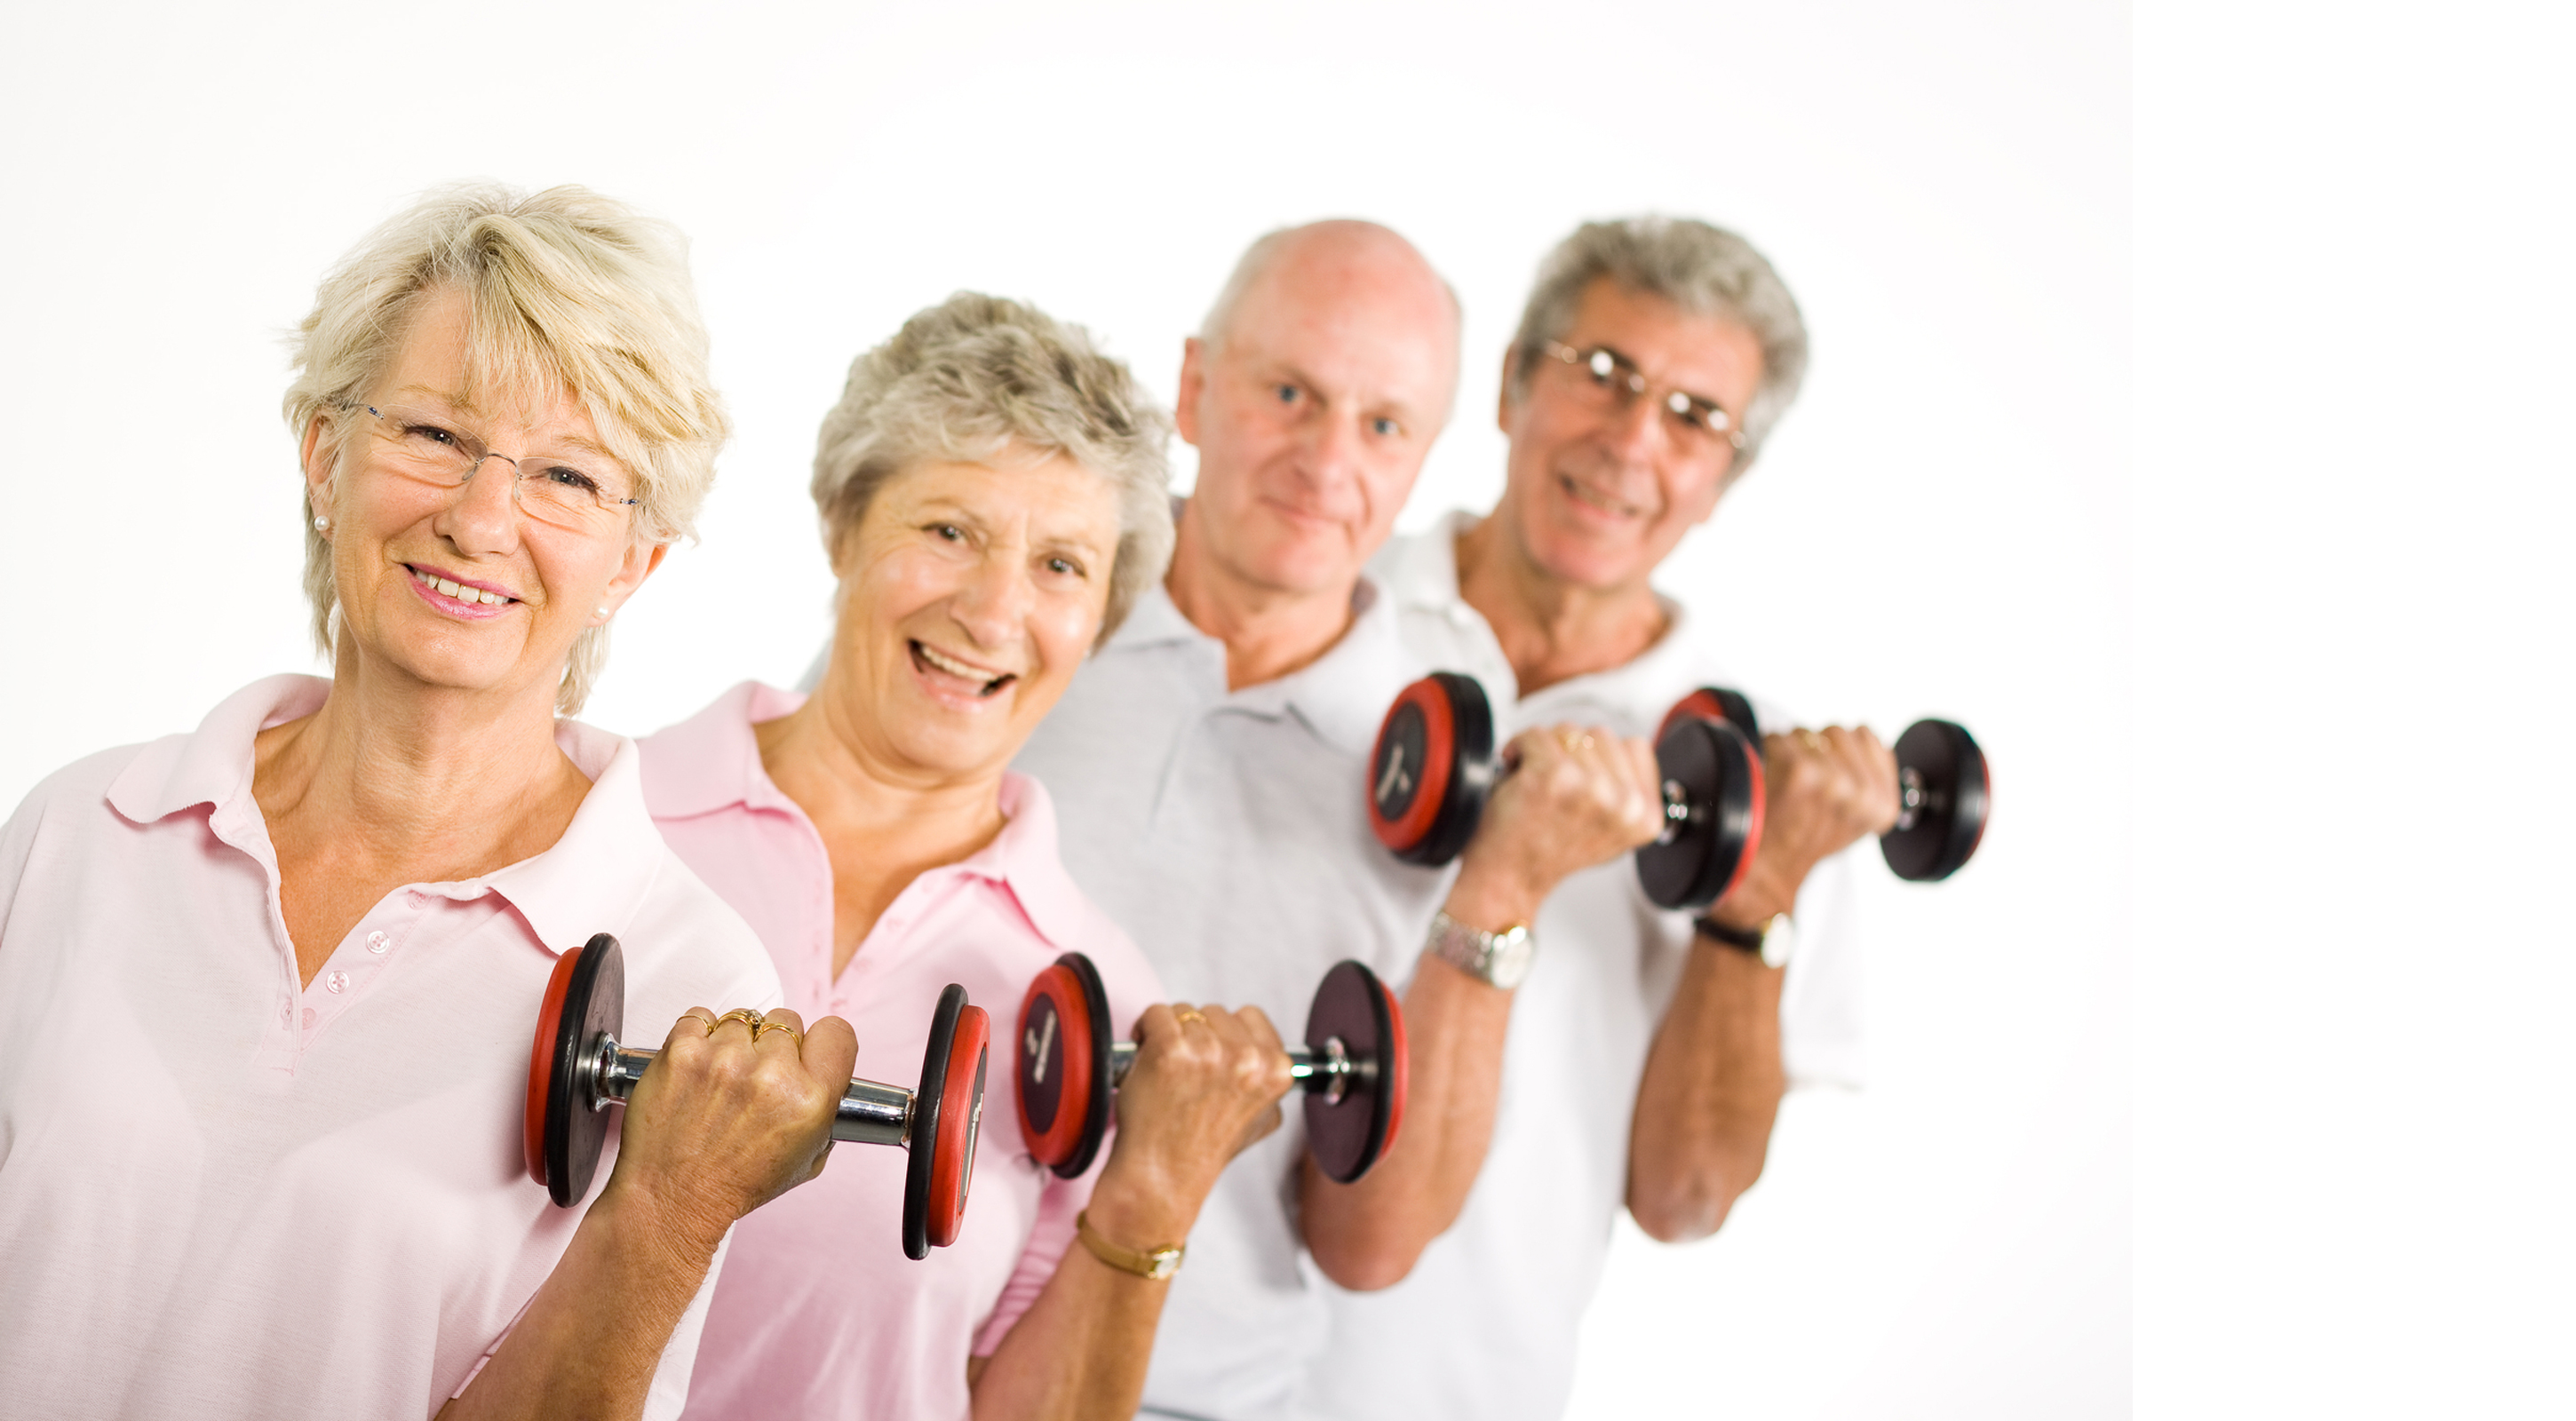 beneficial Tonawanda exercise for osteoporosis